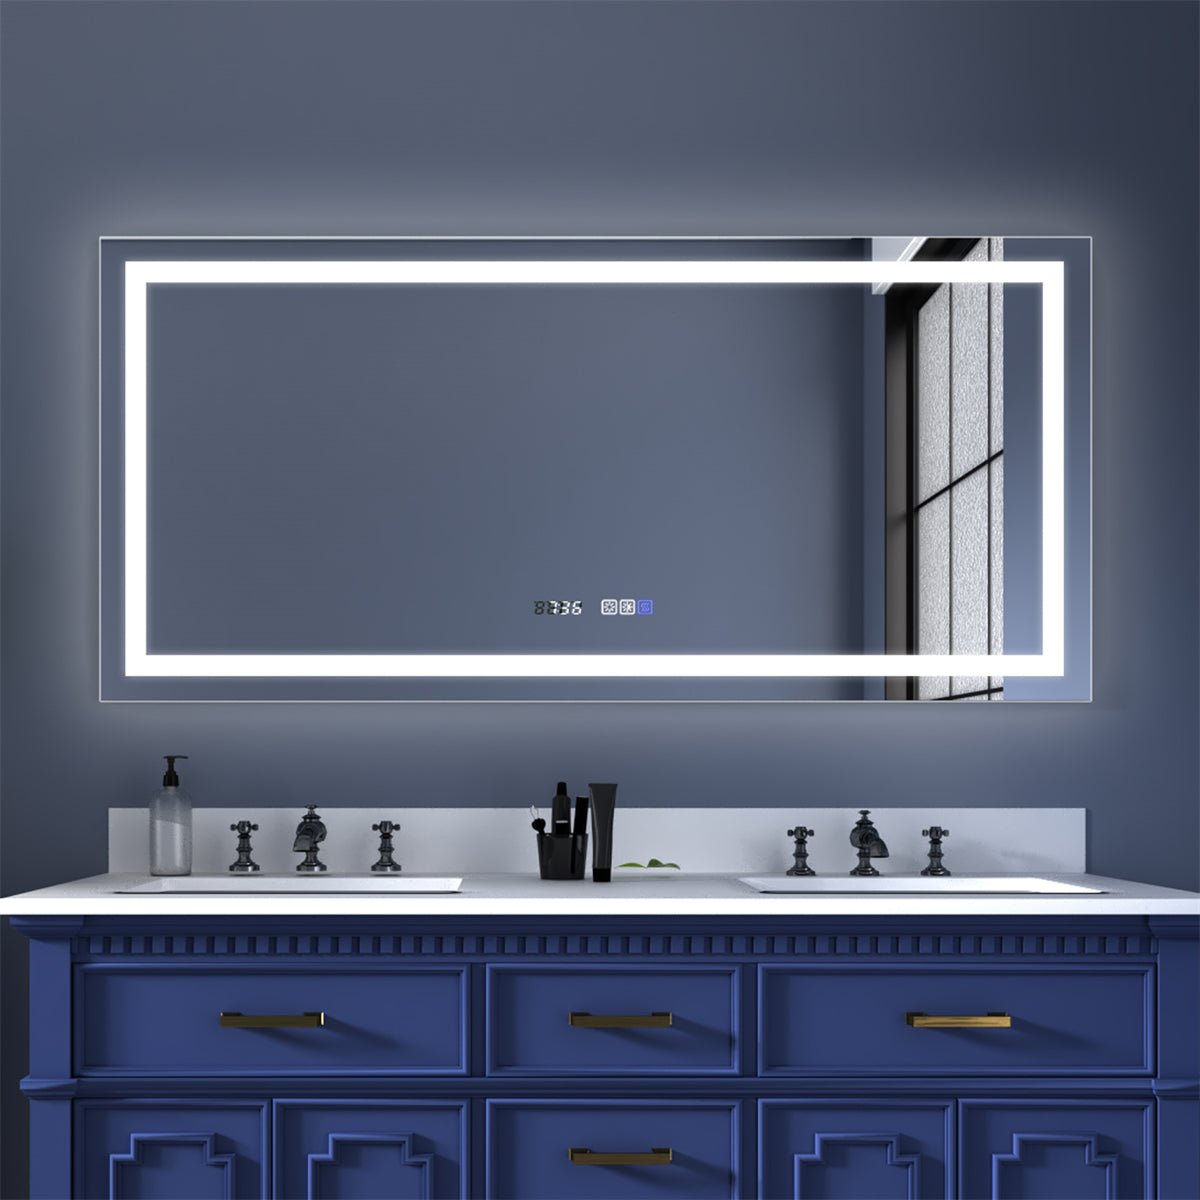 ExBrite 60" W x 28" H Bathroom Light Mirror Fahrenheit Anti Fog with Clock Mirror